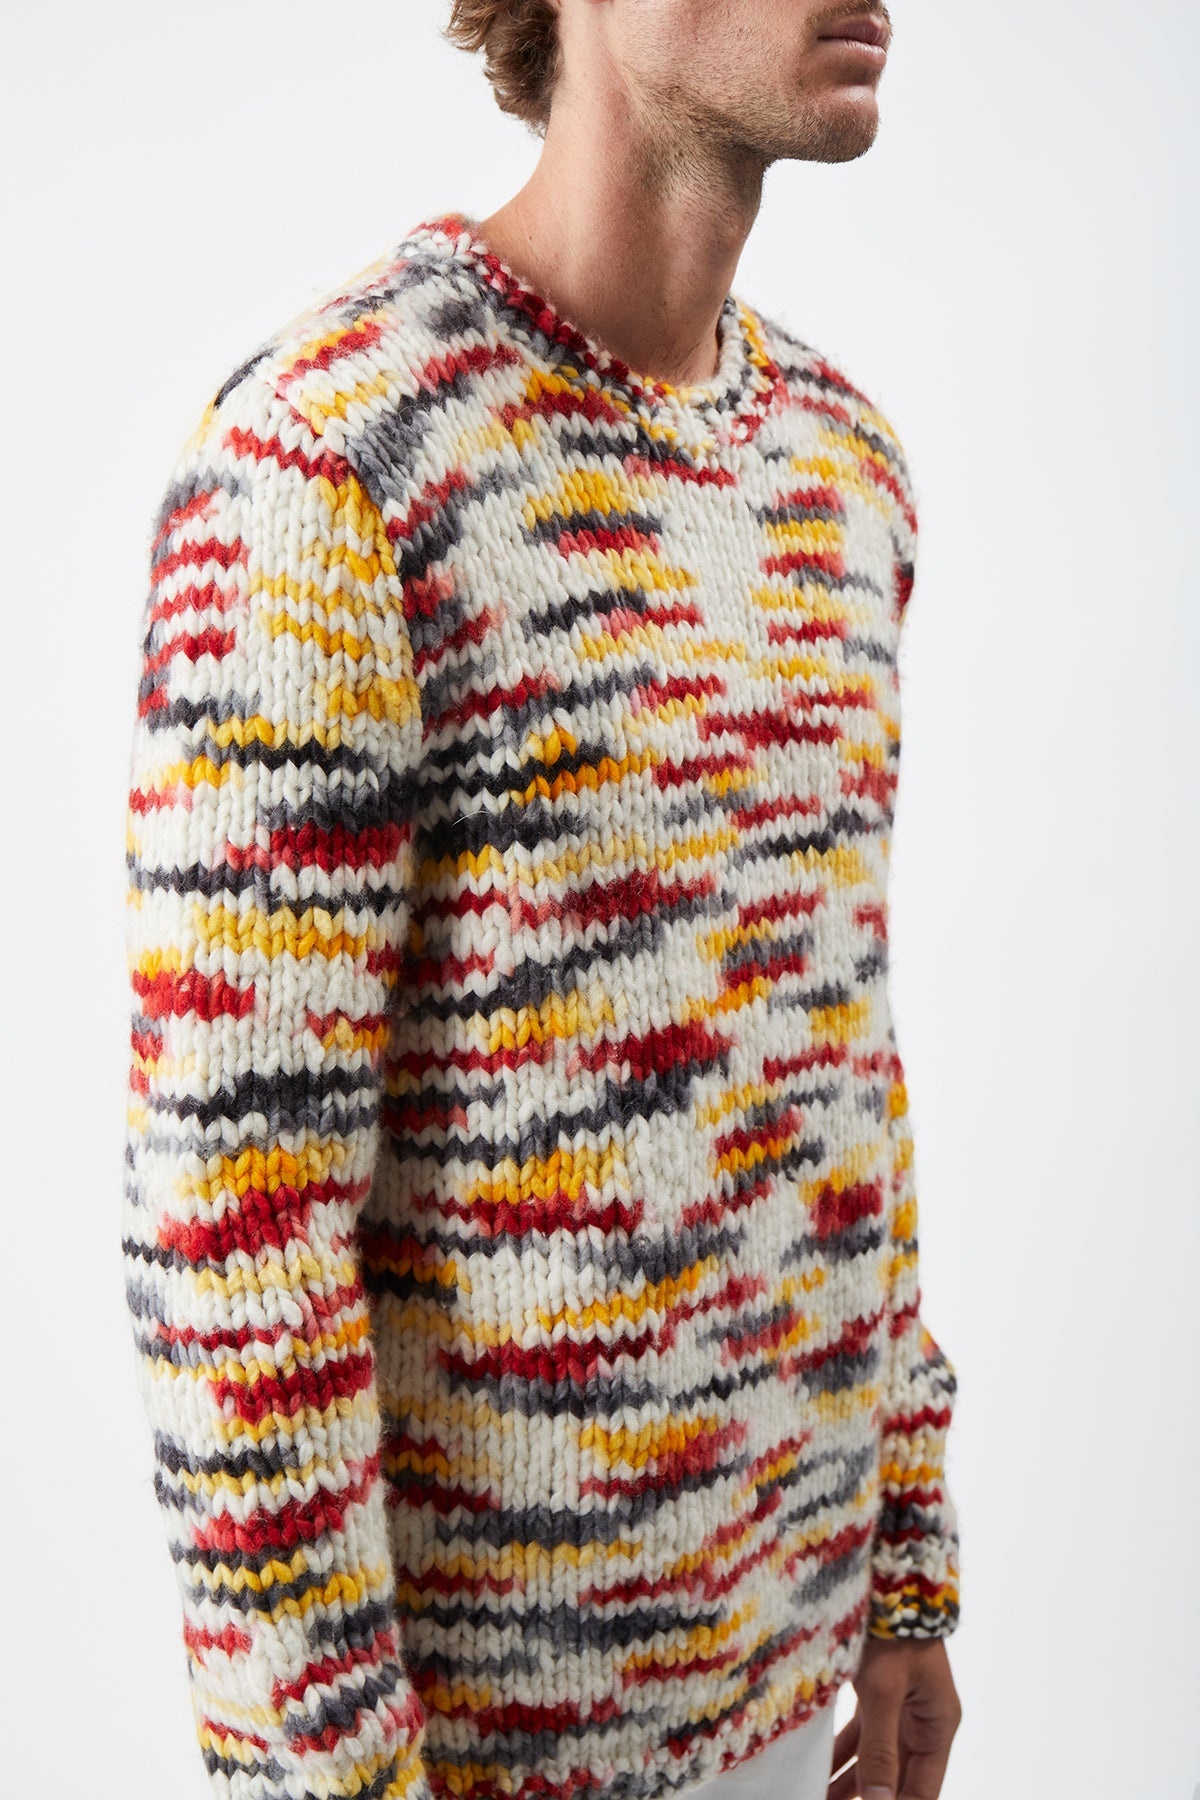 Lawrence Knit Sweater in Fire Multi Space Dye Welfat Cashmere - 5